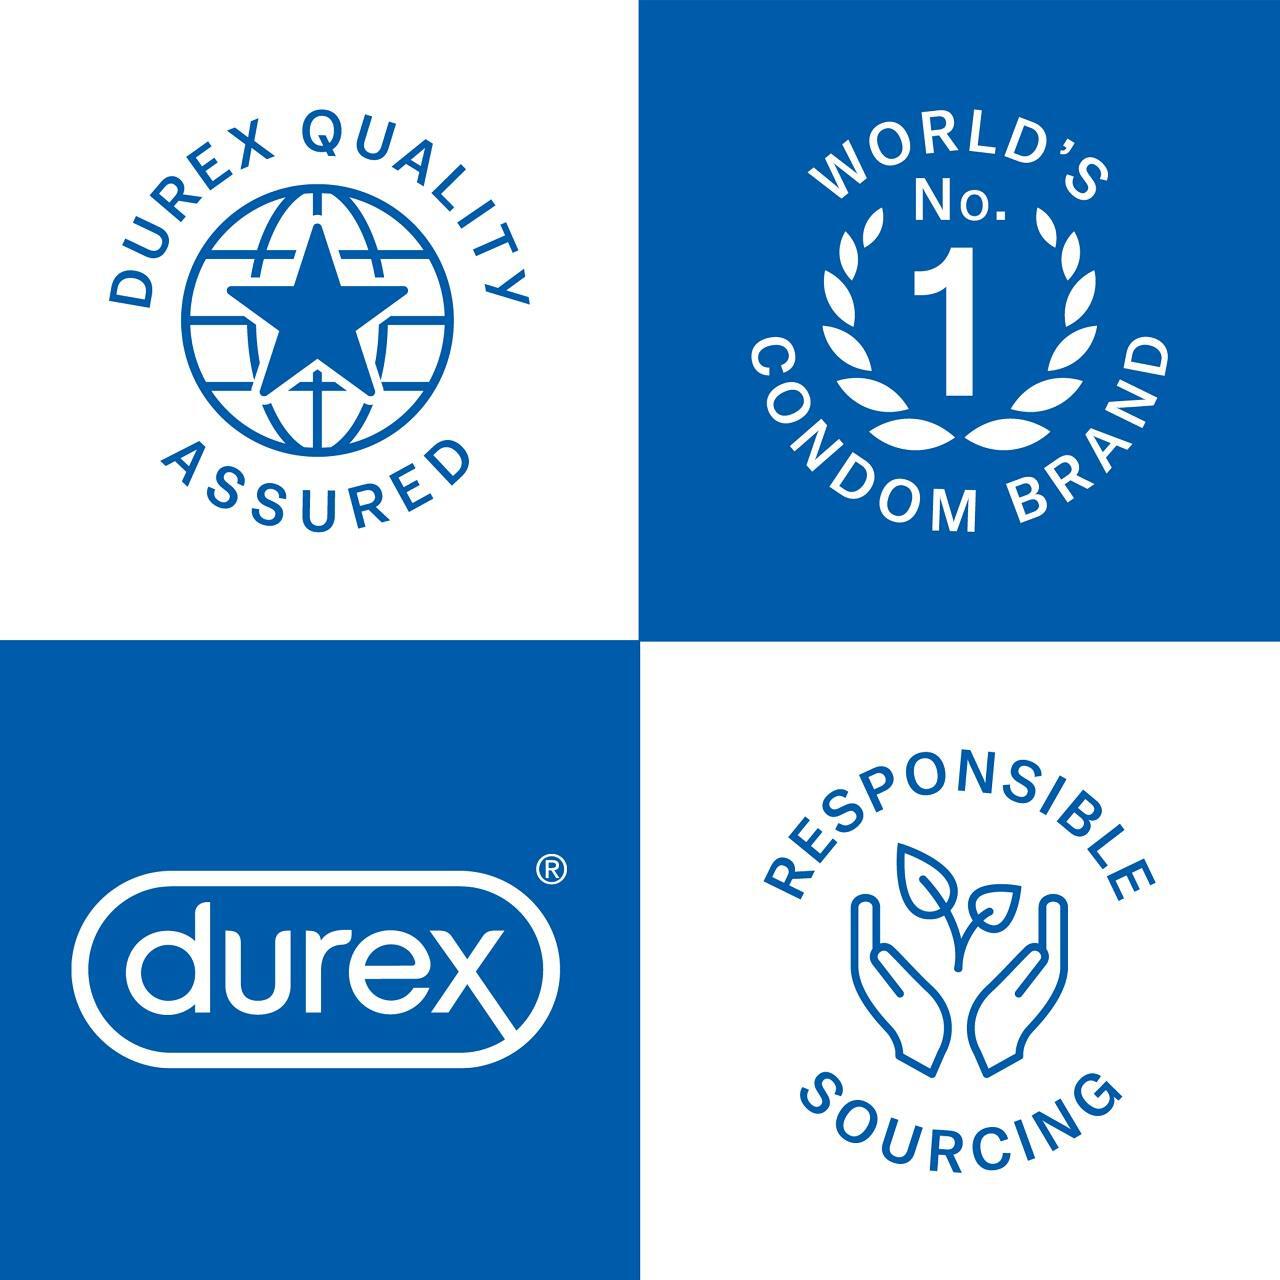 Durex Extended Pleasure Condoms Regular Fit 12 per pack